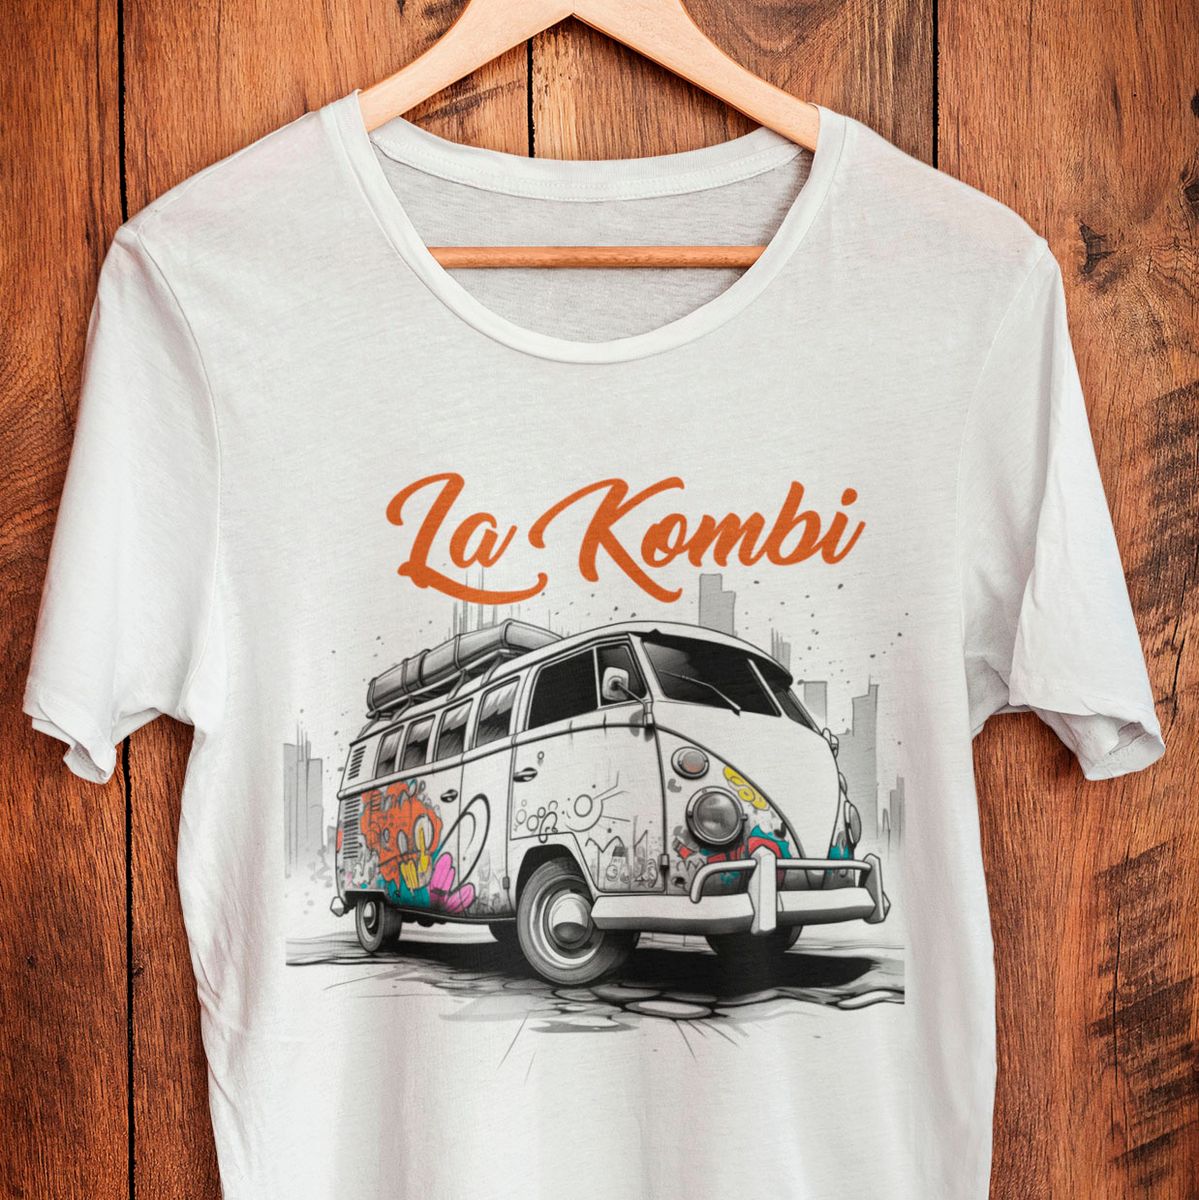 Nome do produto: La Kombi